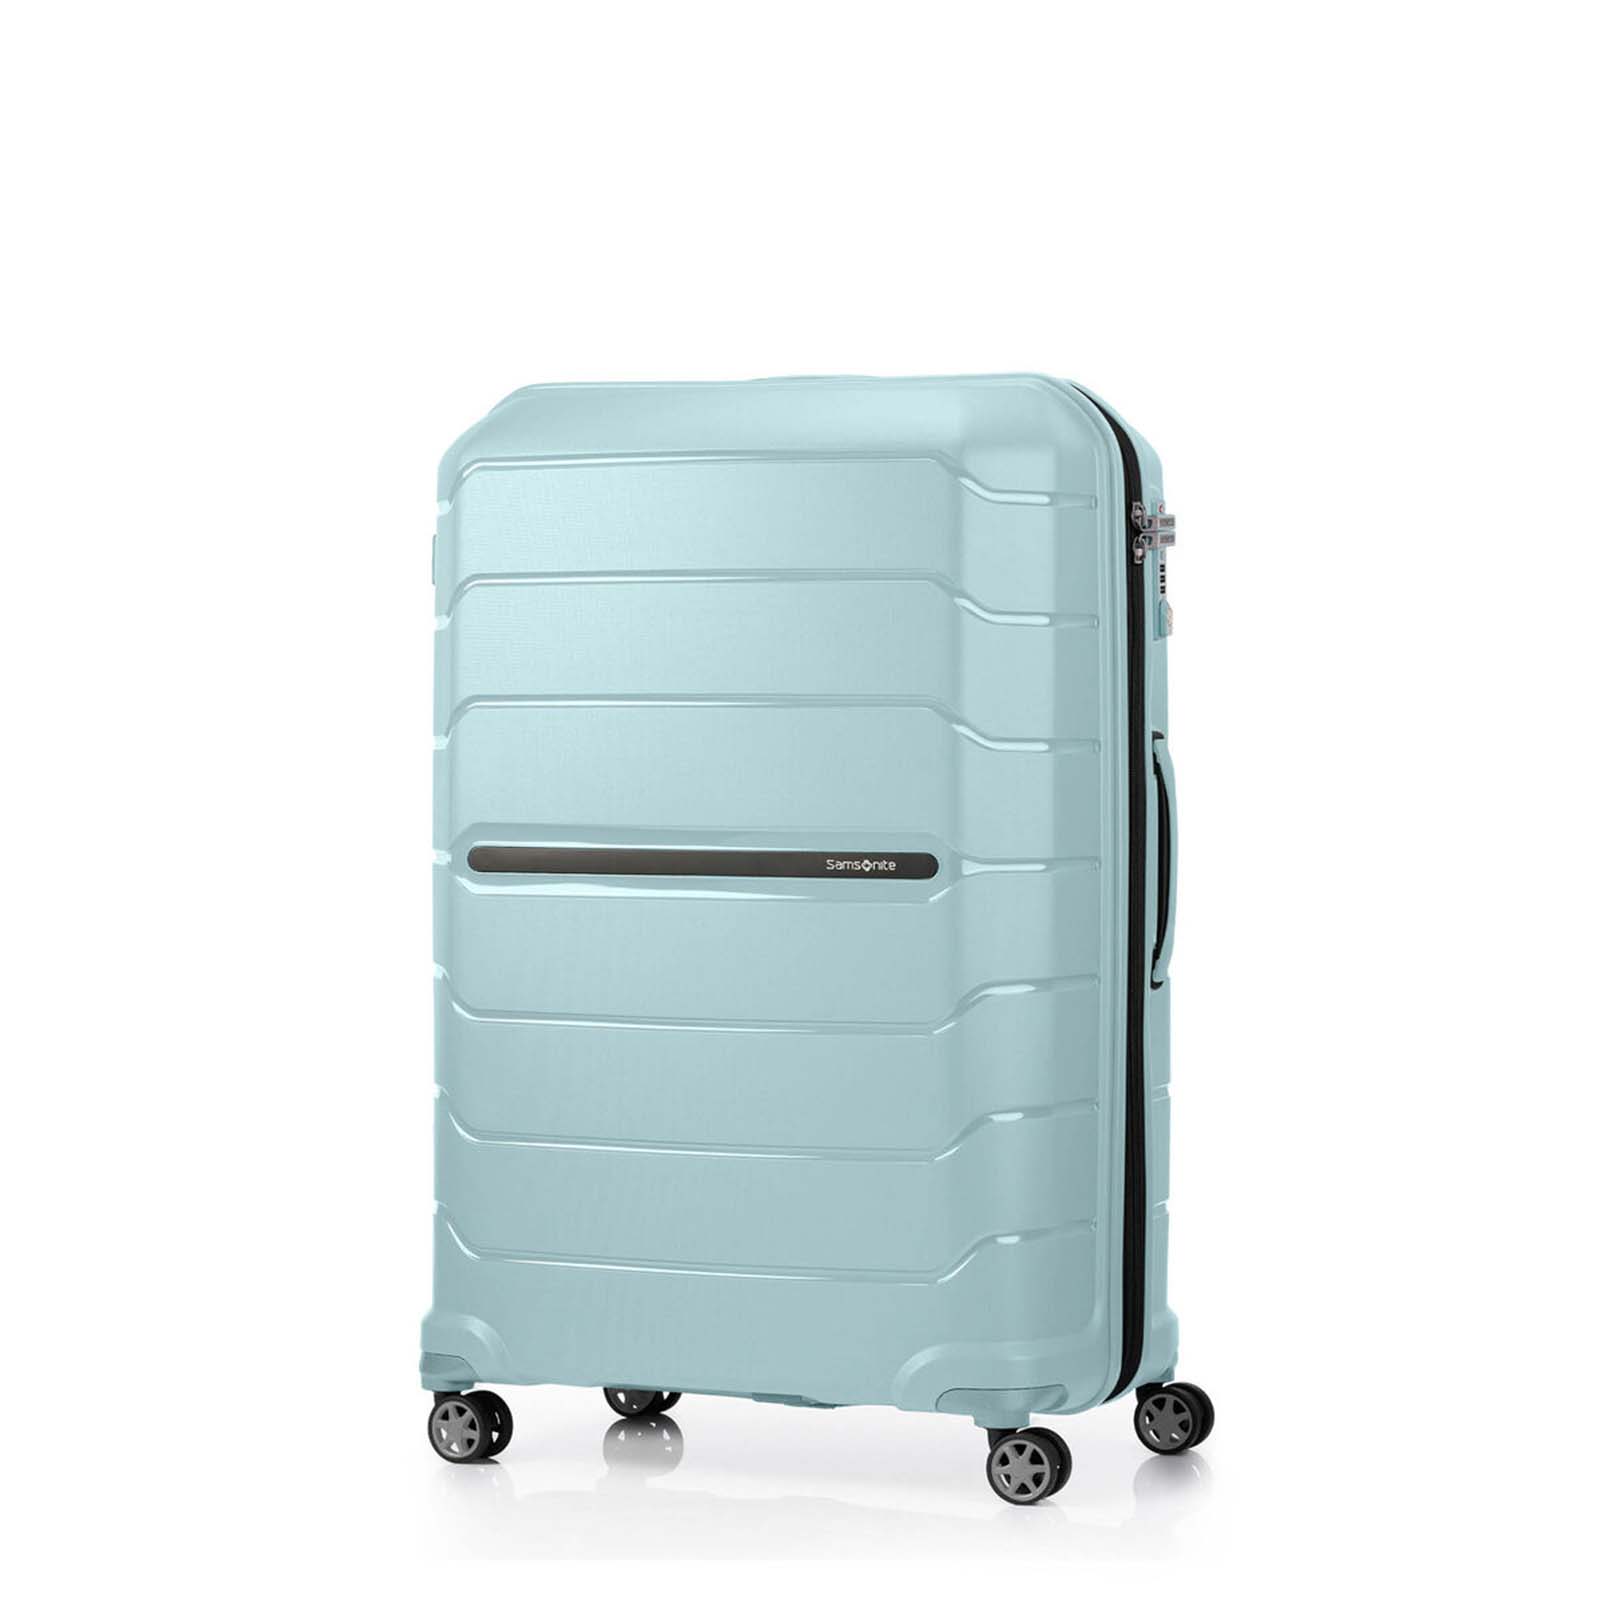 Samsonite-Oc2lite-75cm-Suitcase-Lagoon-Blue-Side-Angle